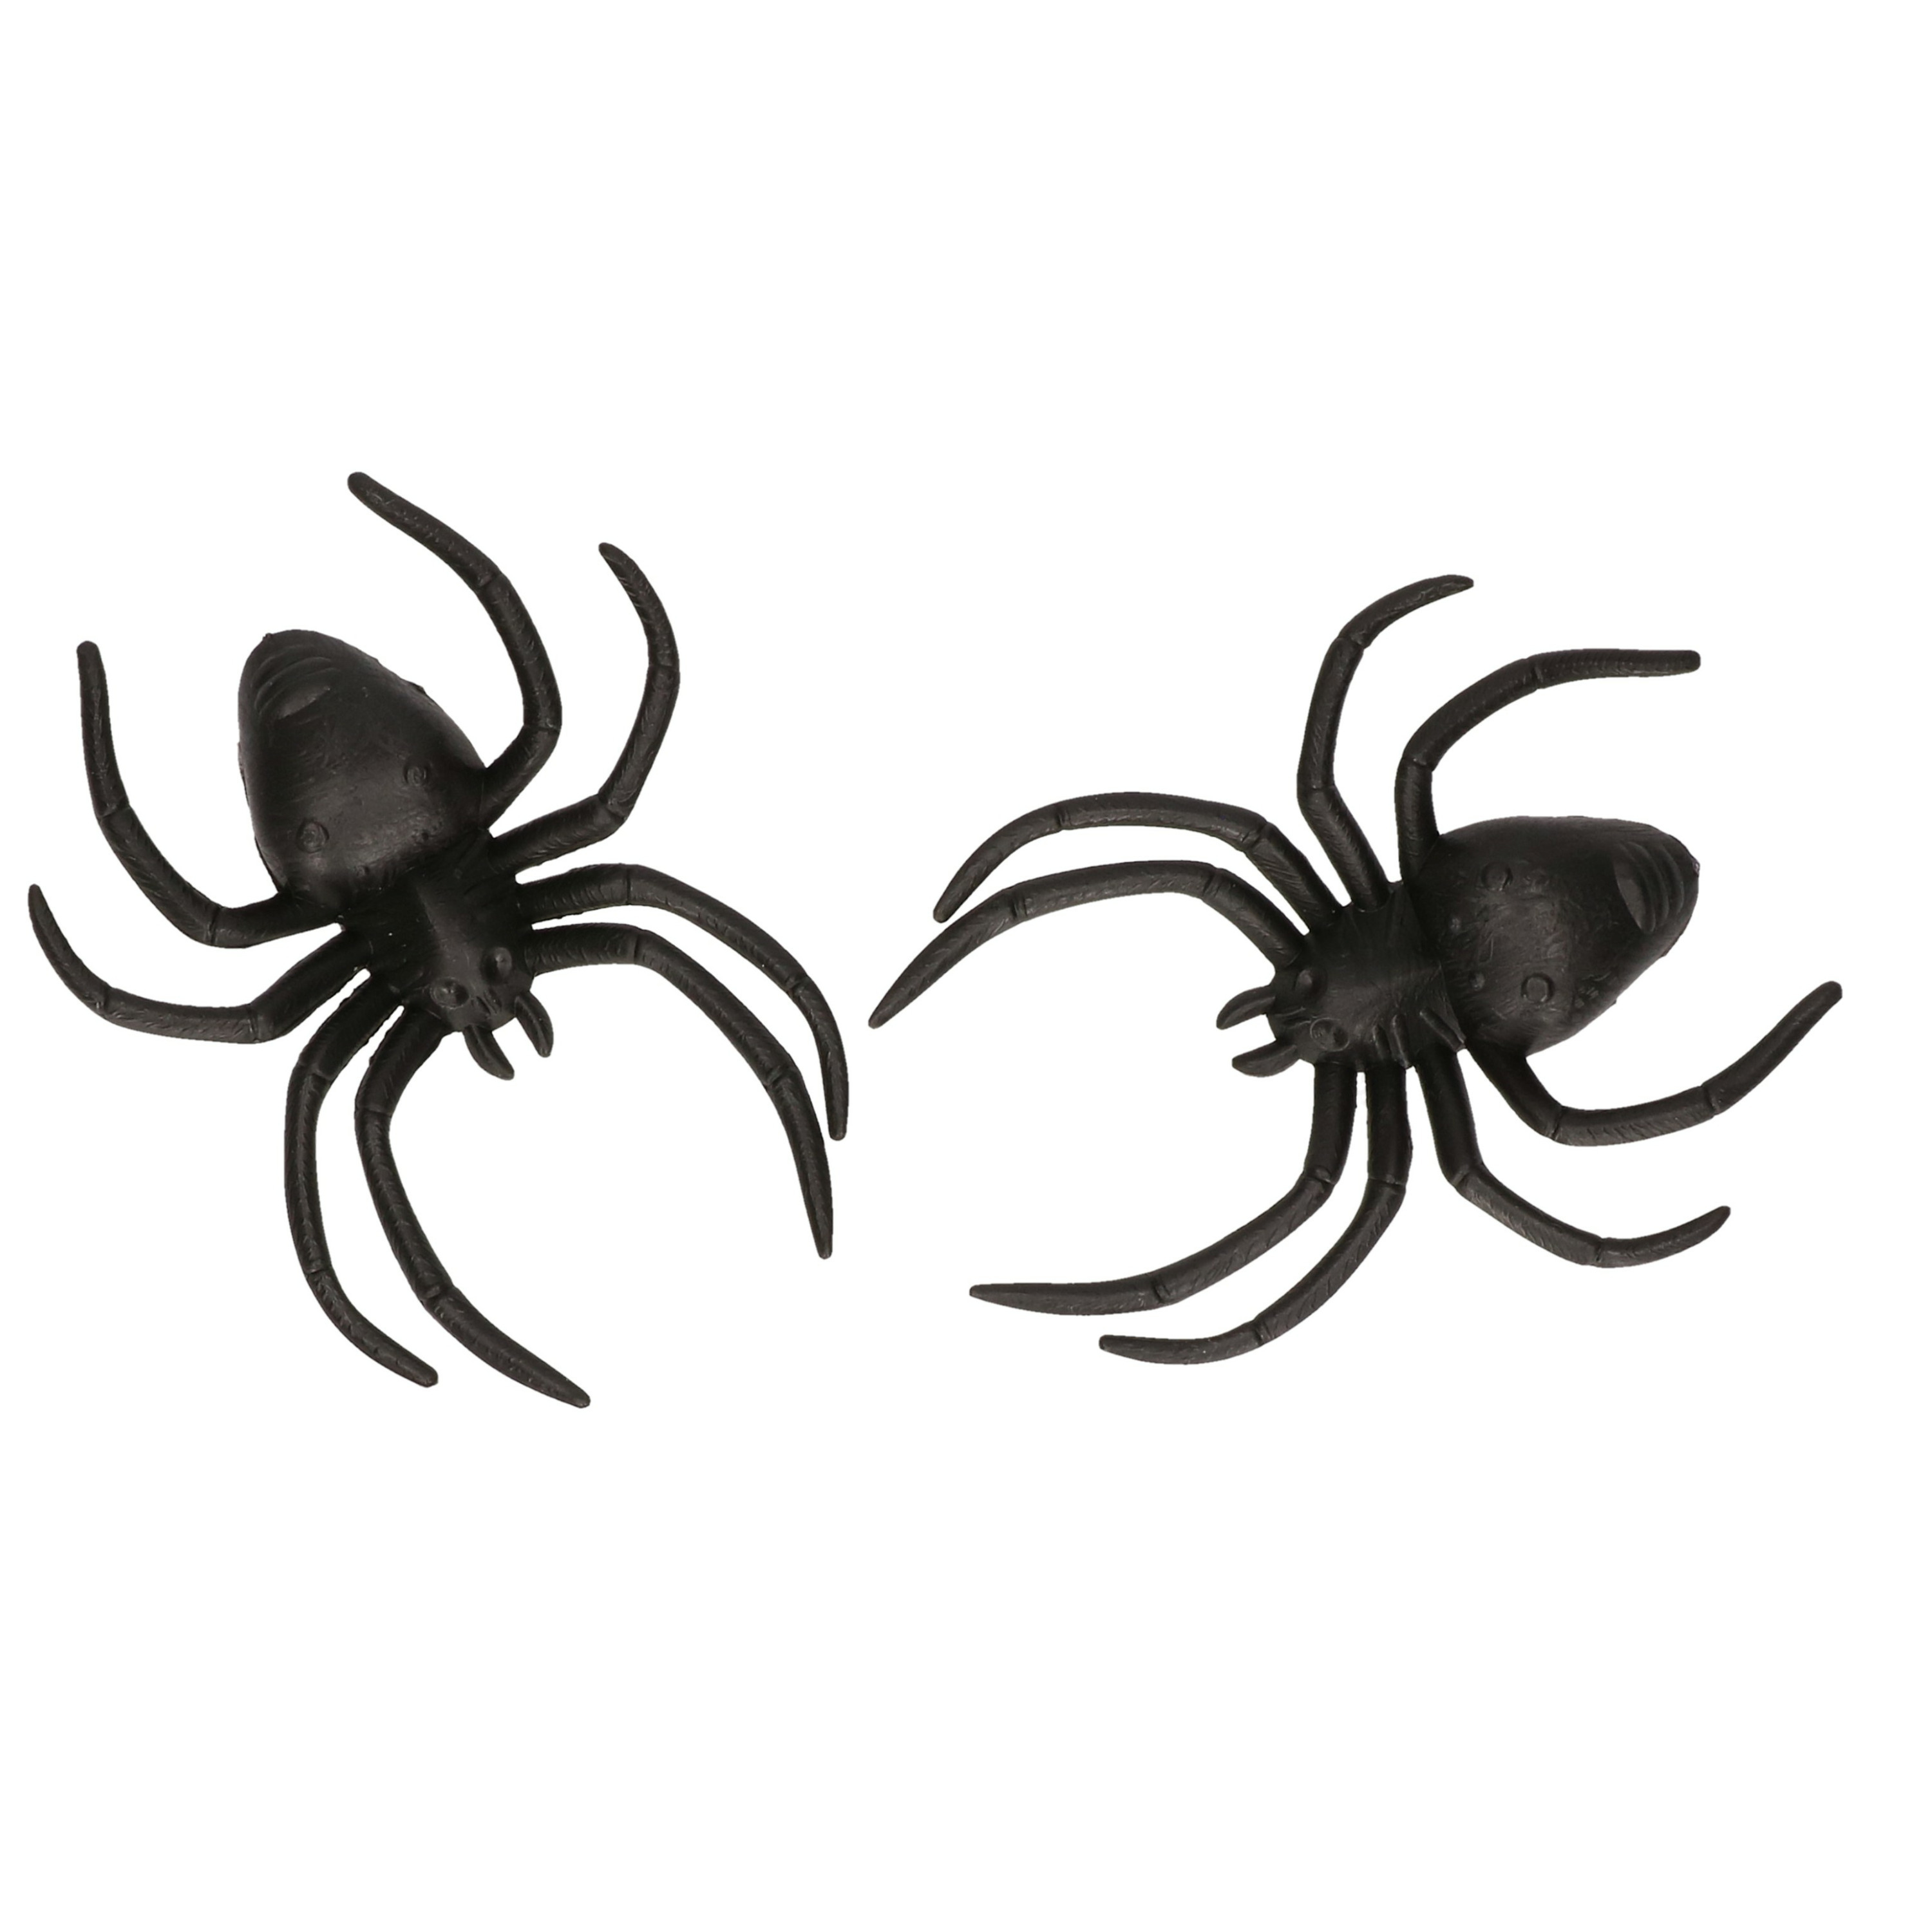 Nep spinnen/spinnetjes 12 cm - zwart - 2x stuks - Horror/griezel thema decoratie beestjes